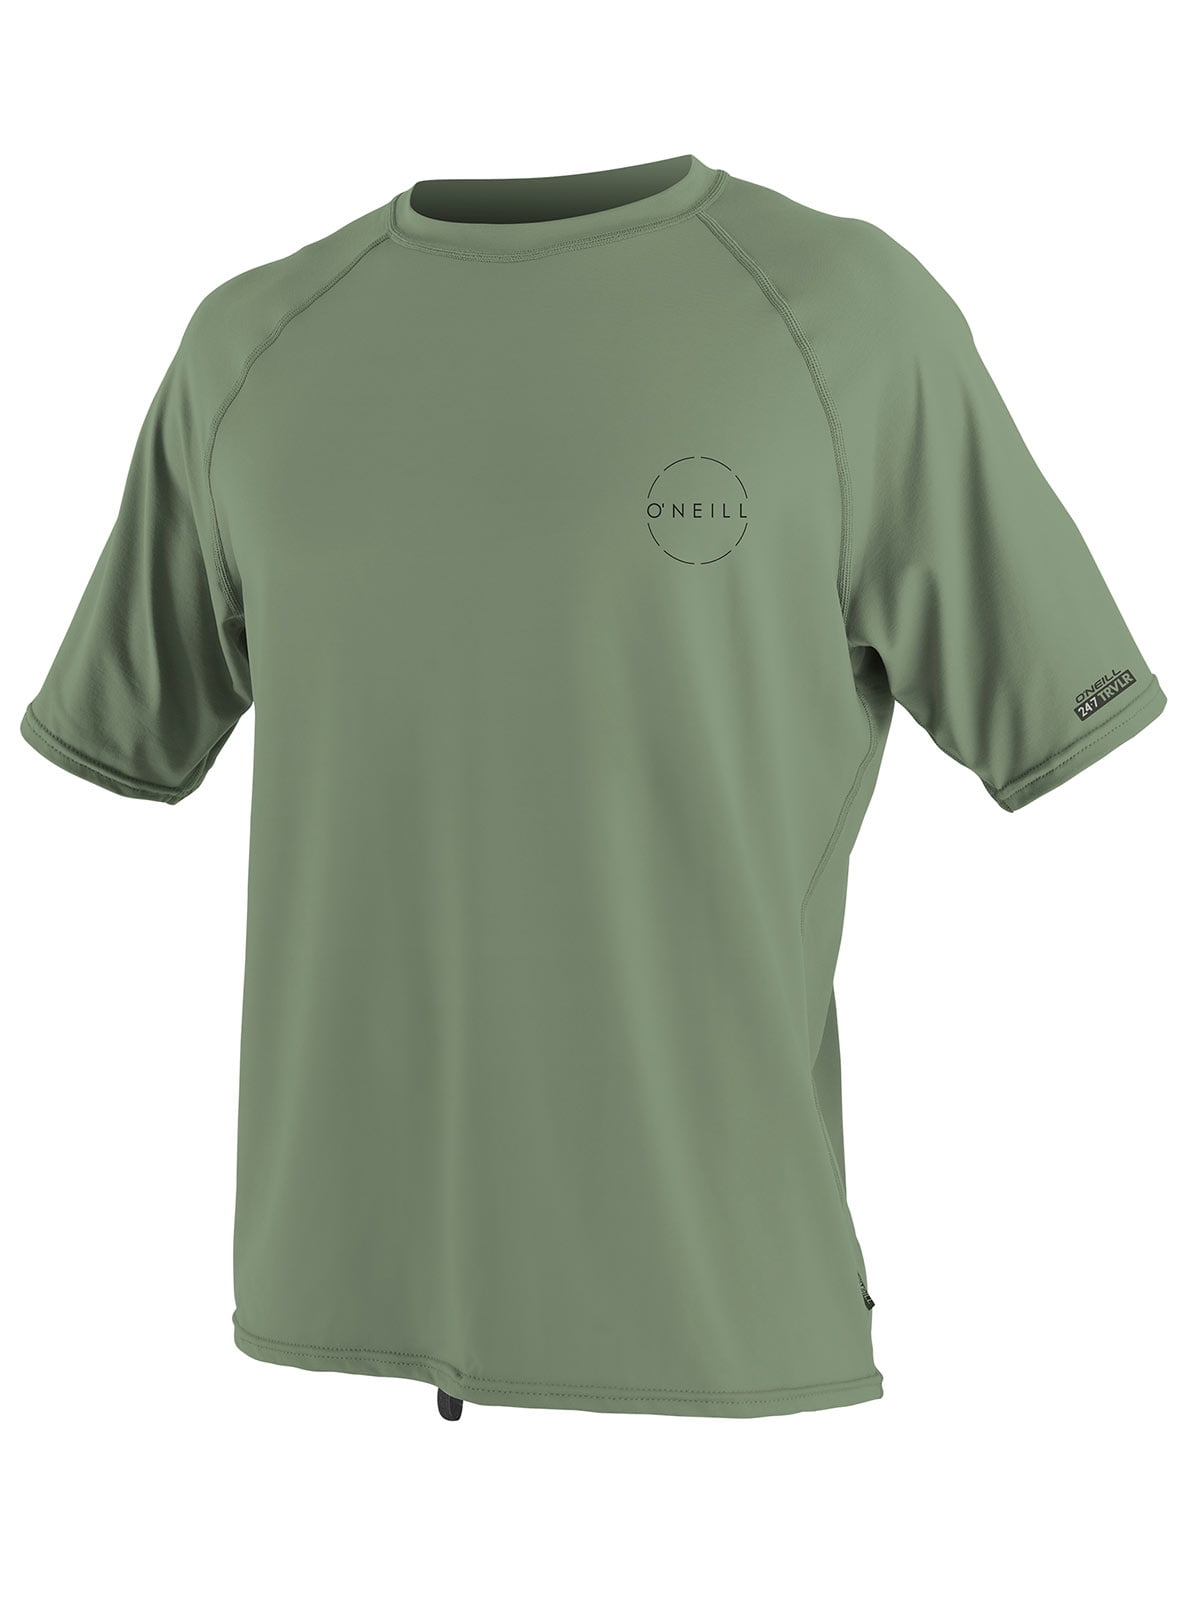 L/S Sun Shirt Mens Sz M Graphite Details about   O'Neill Basic UPF 30 